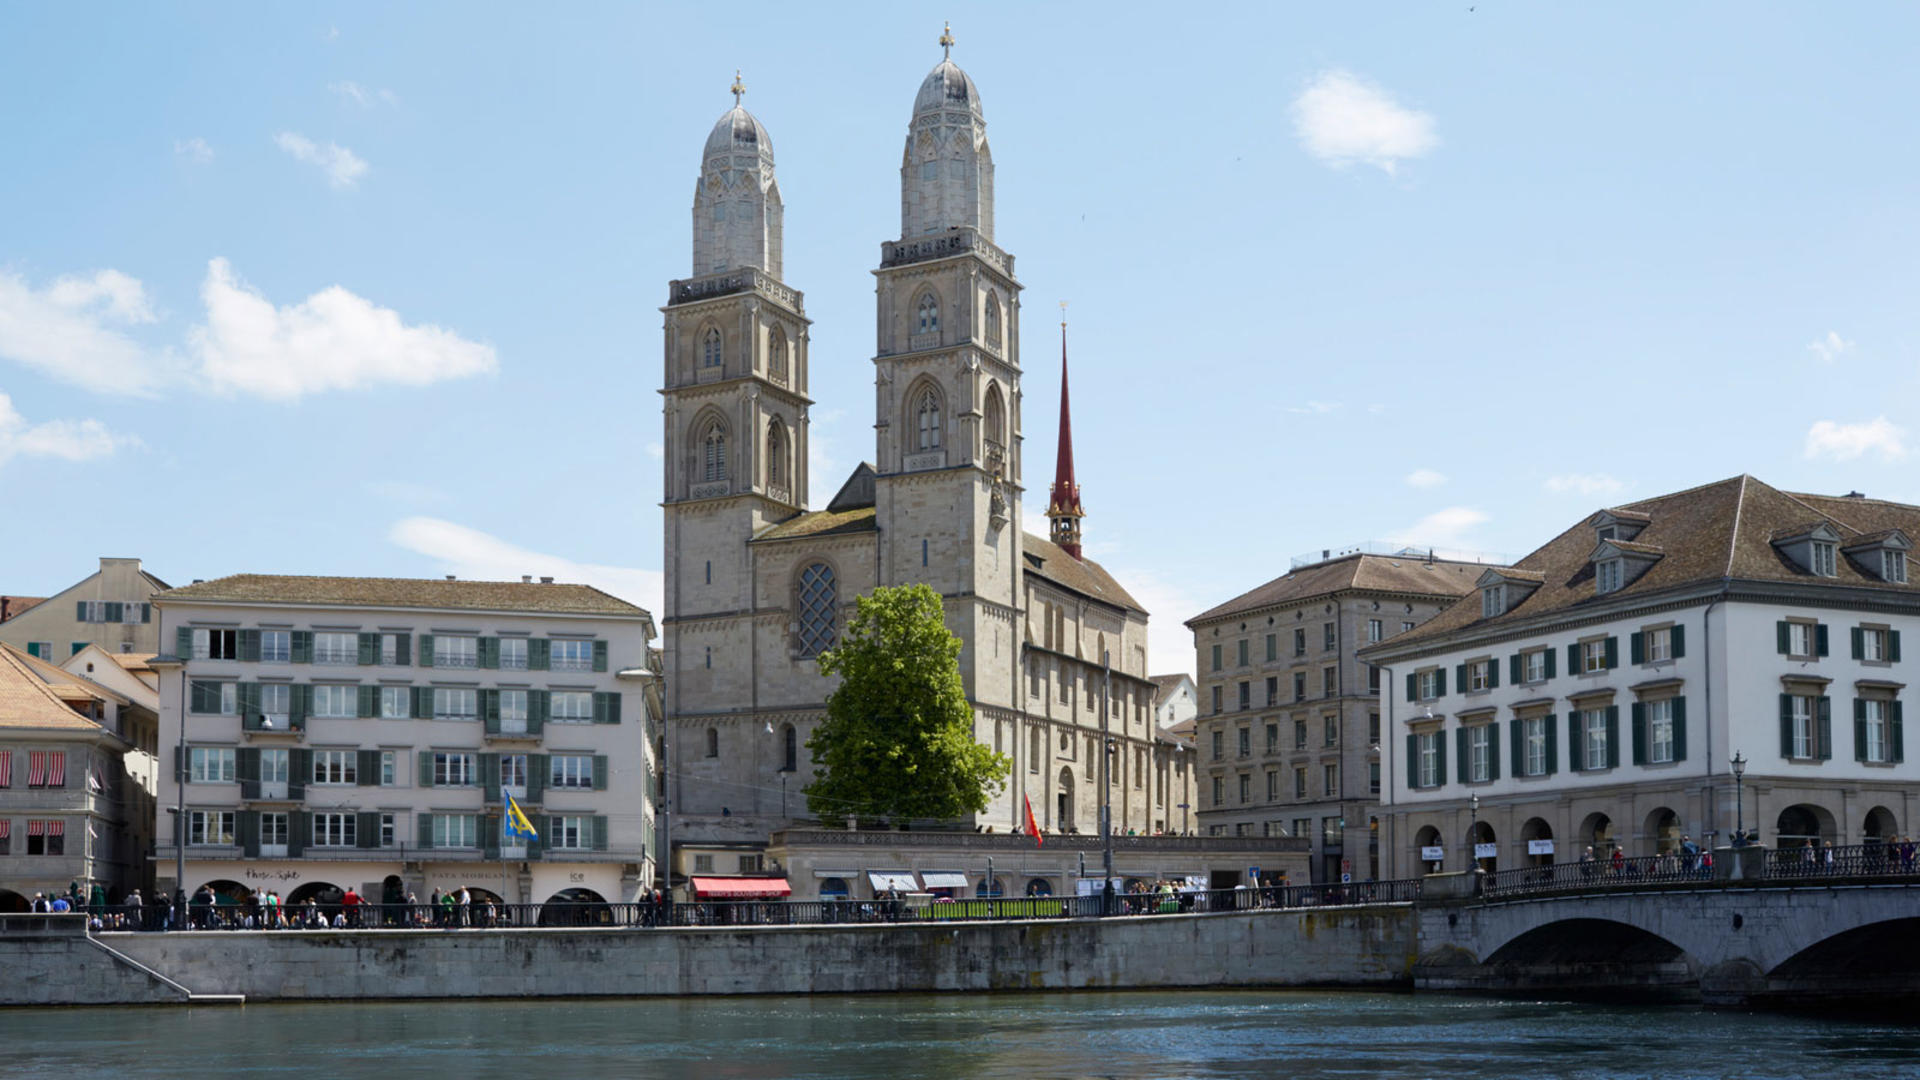 Grossmunster church in the city of Zurich